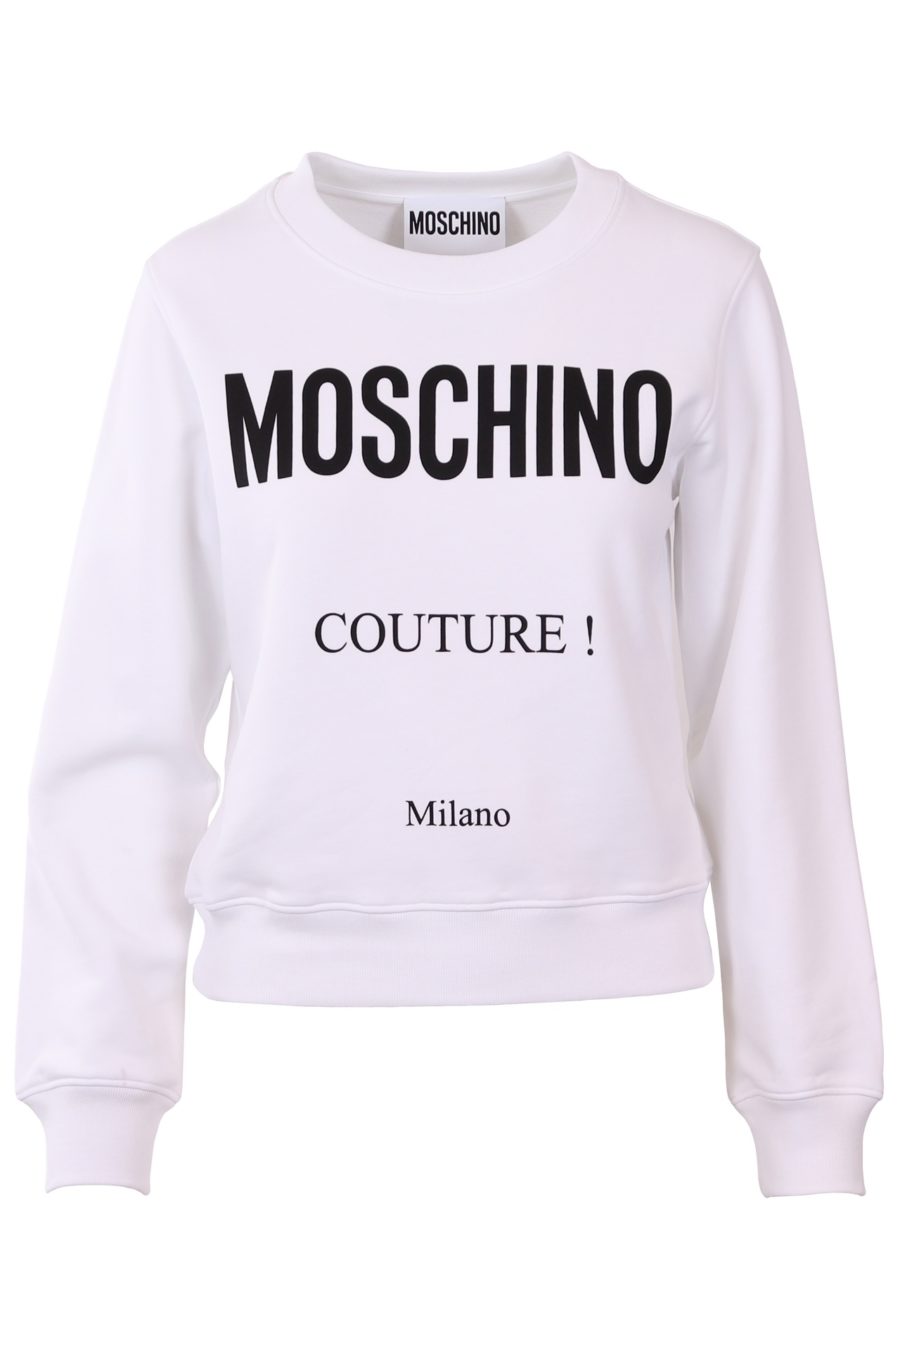 Sudadera Moschino Couture blanca con logo milano - ce7dc8991d6a0a15e7a7ddb086b16794d4827c6b